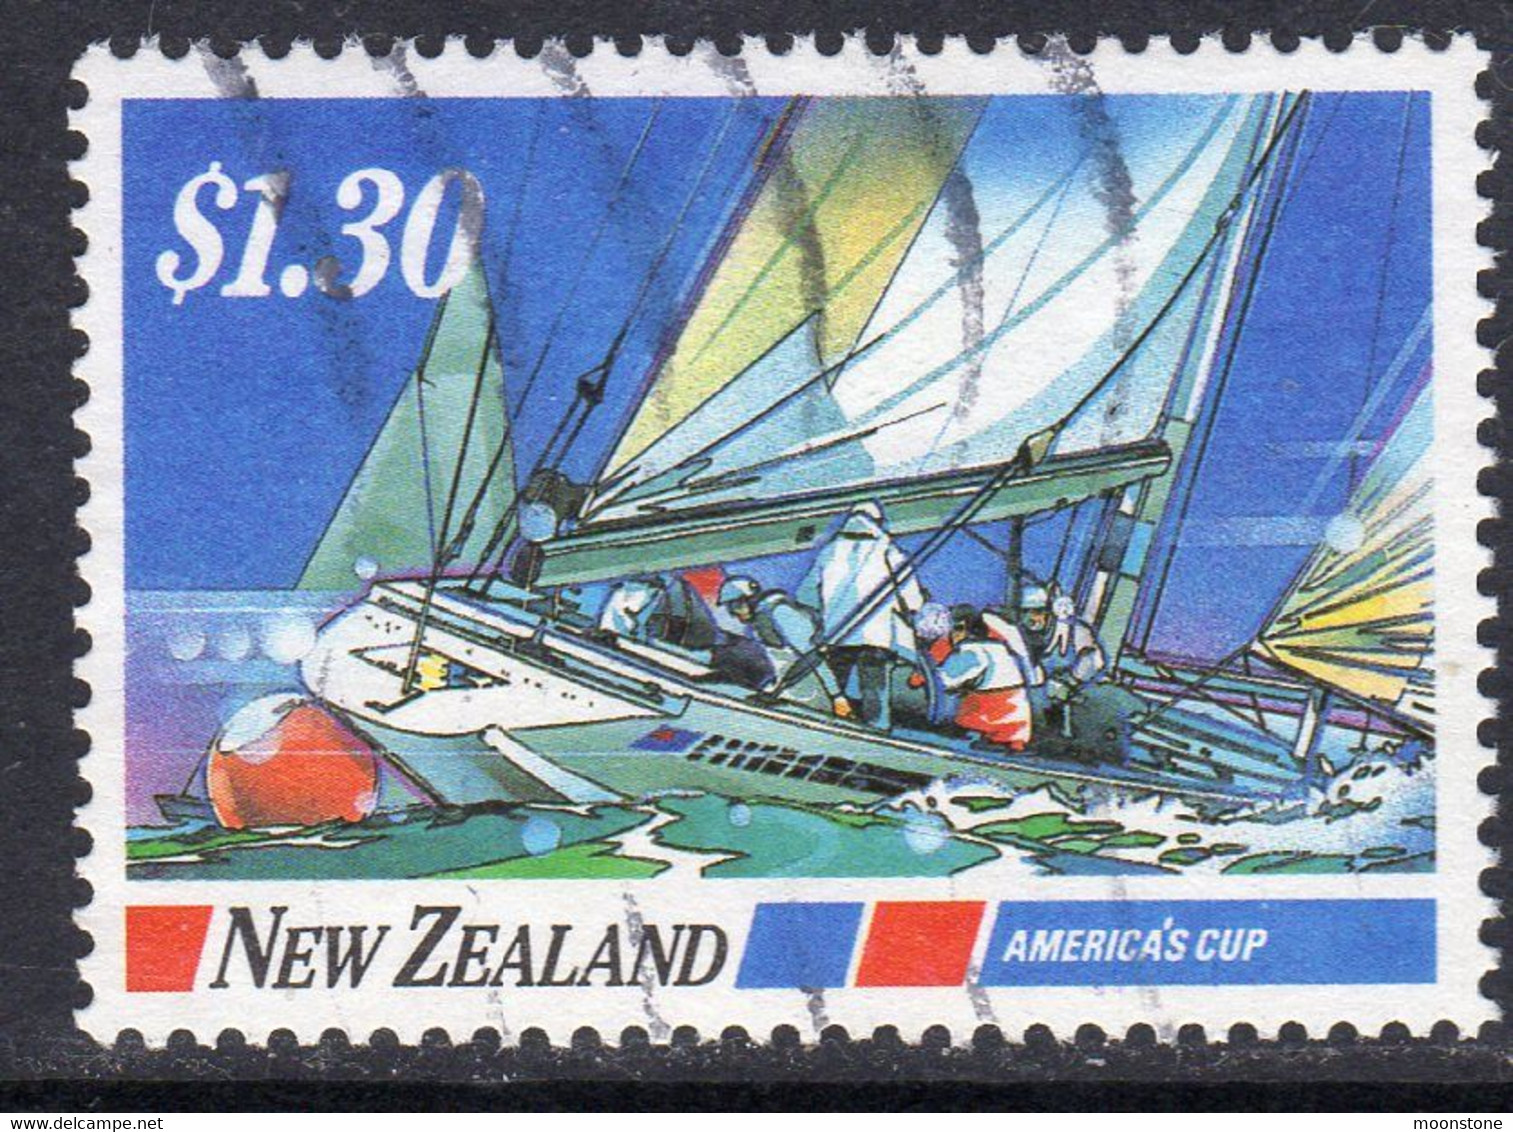 New Zealand 1987 Yachting $1.80 Value, Used, SG 1420 - Gebruikt